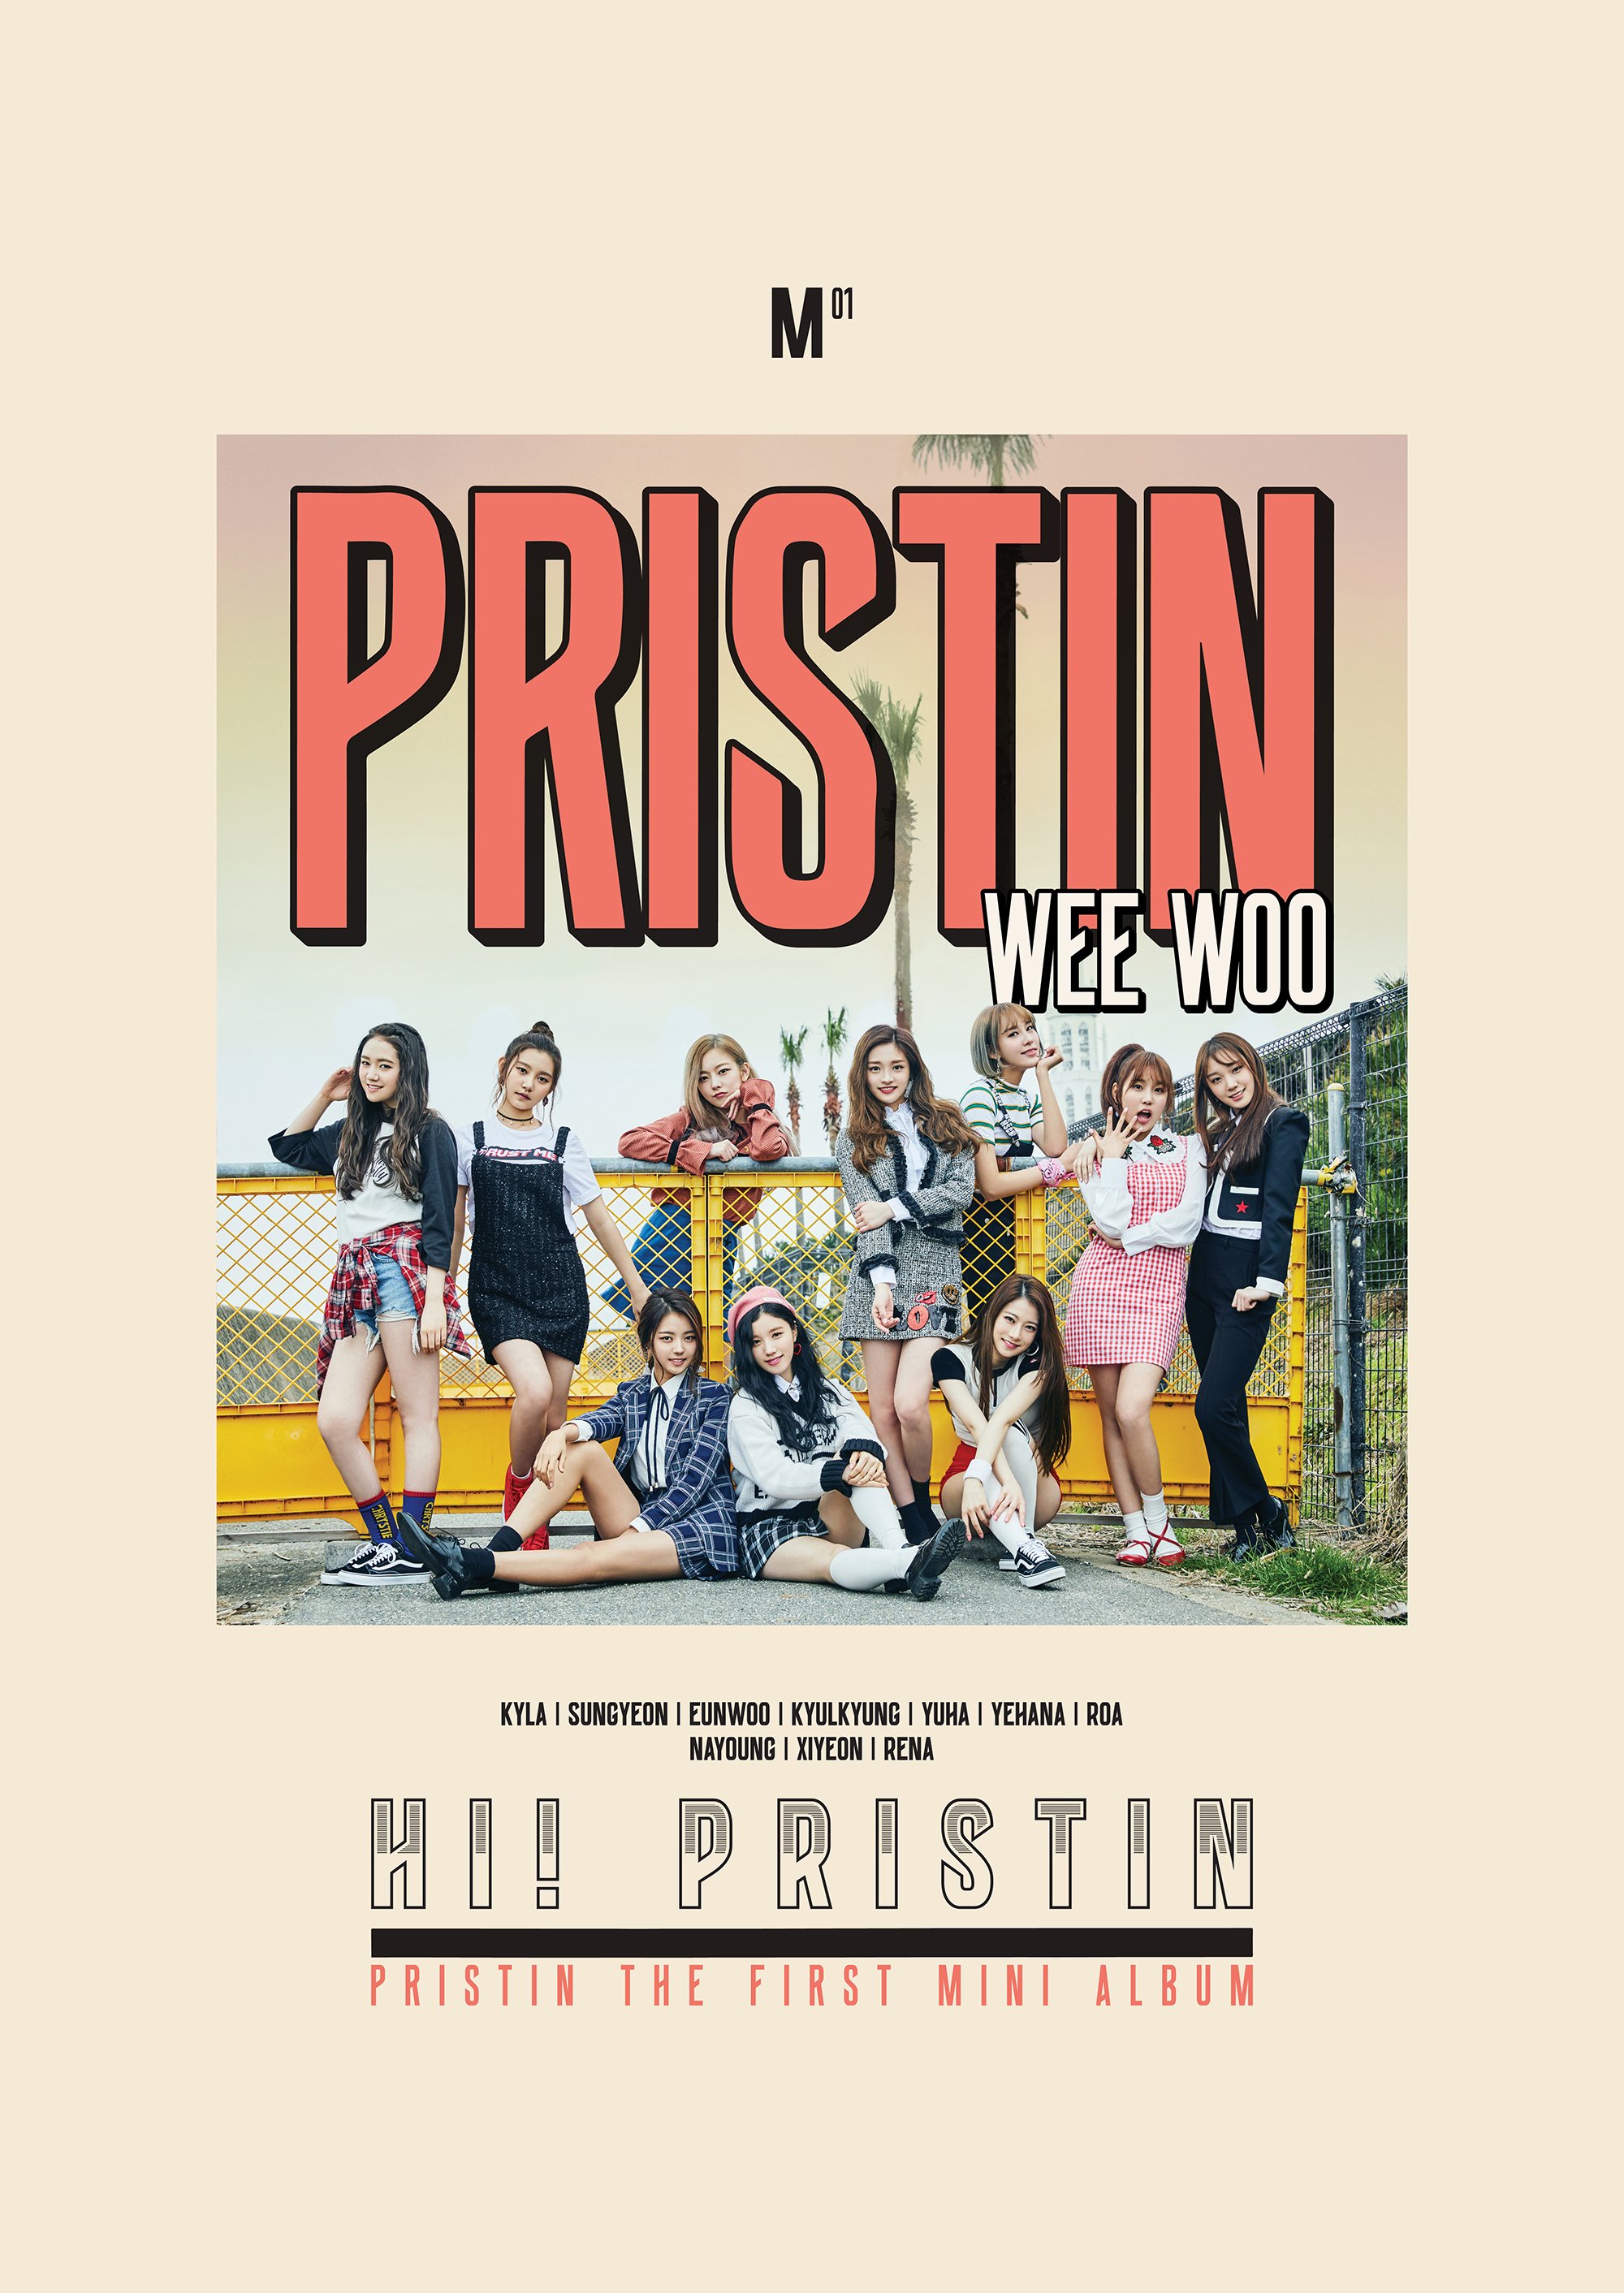 pristin wee woo mp3 free download